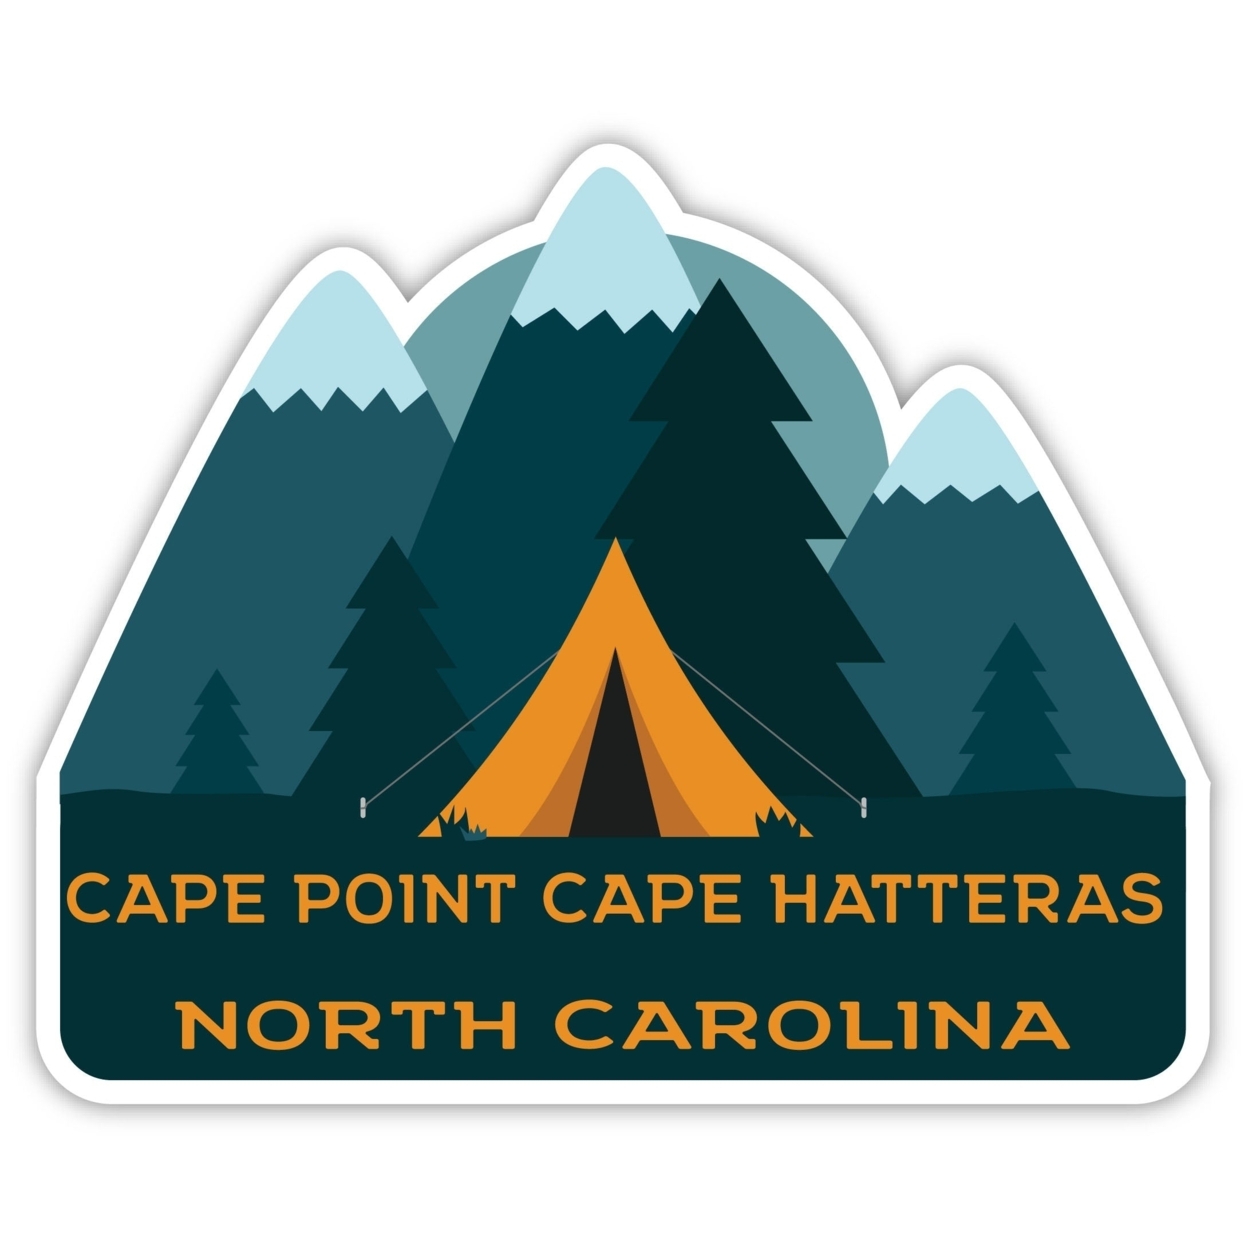 Cape Point Cape Hatteras North Carolina Souvenir Decorative Stickers (Choose Theme And Size) - Single Unit, 10-Inch, Tent